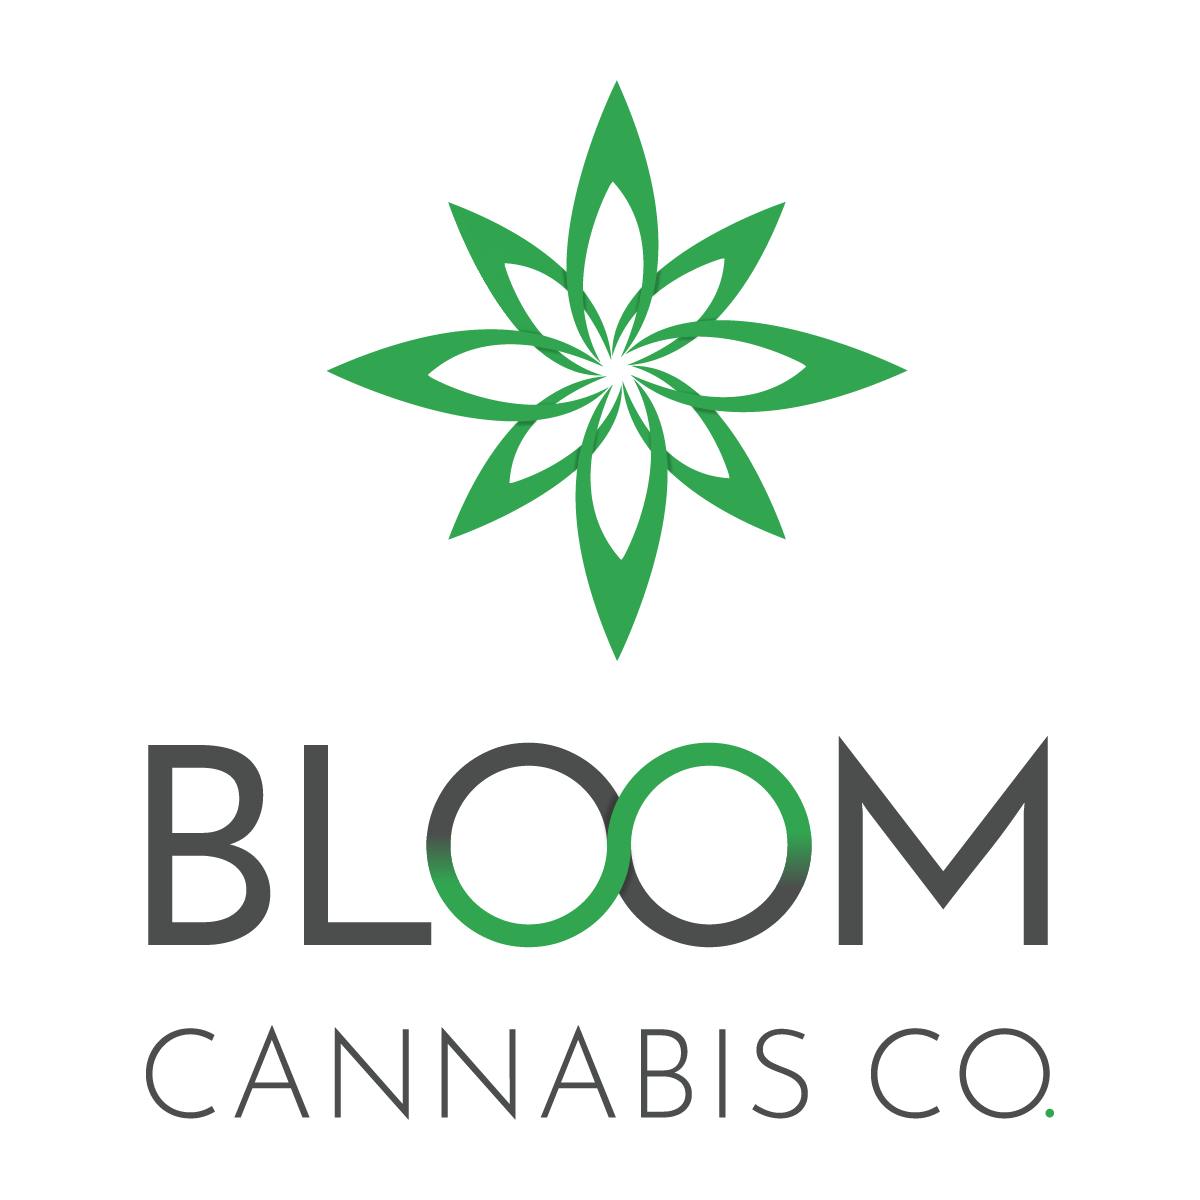 BLOOM Cannabis Co. - Marijuana & Cannabis Dispensary in Midwest City logo